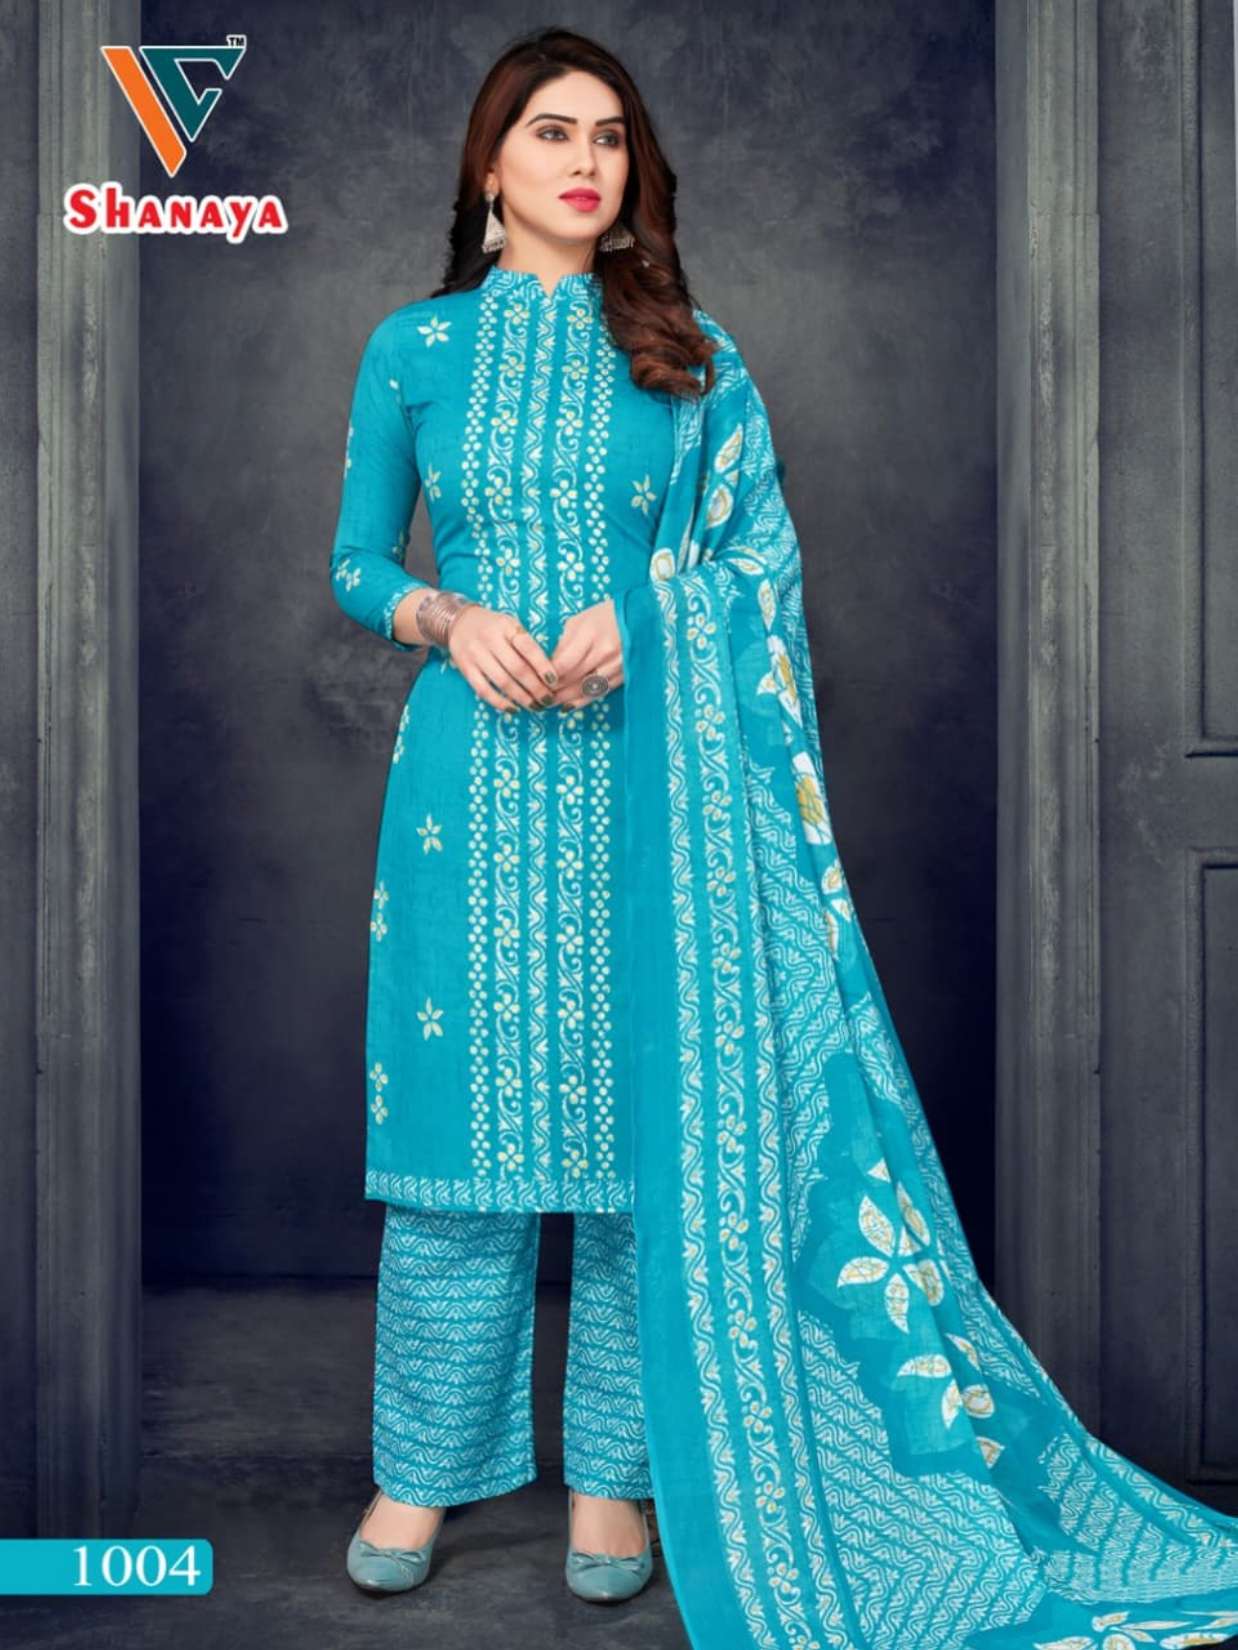 Vandana Shanaya Vol 1 Printed Cotton Dress Material On Wholesale